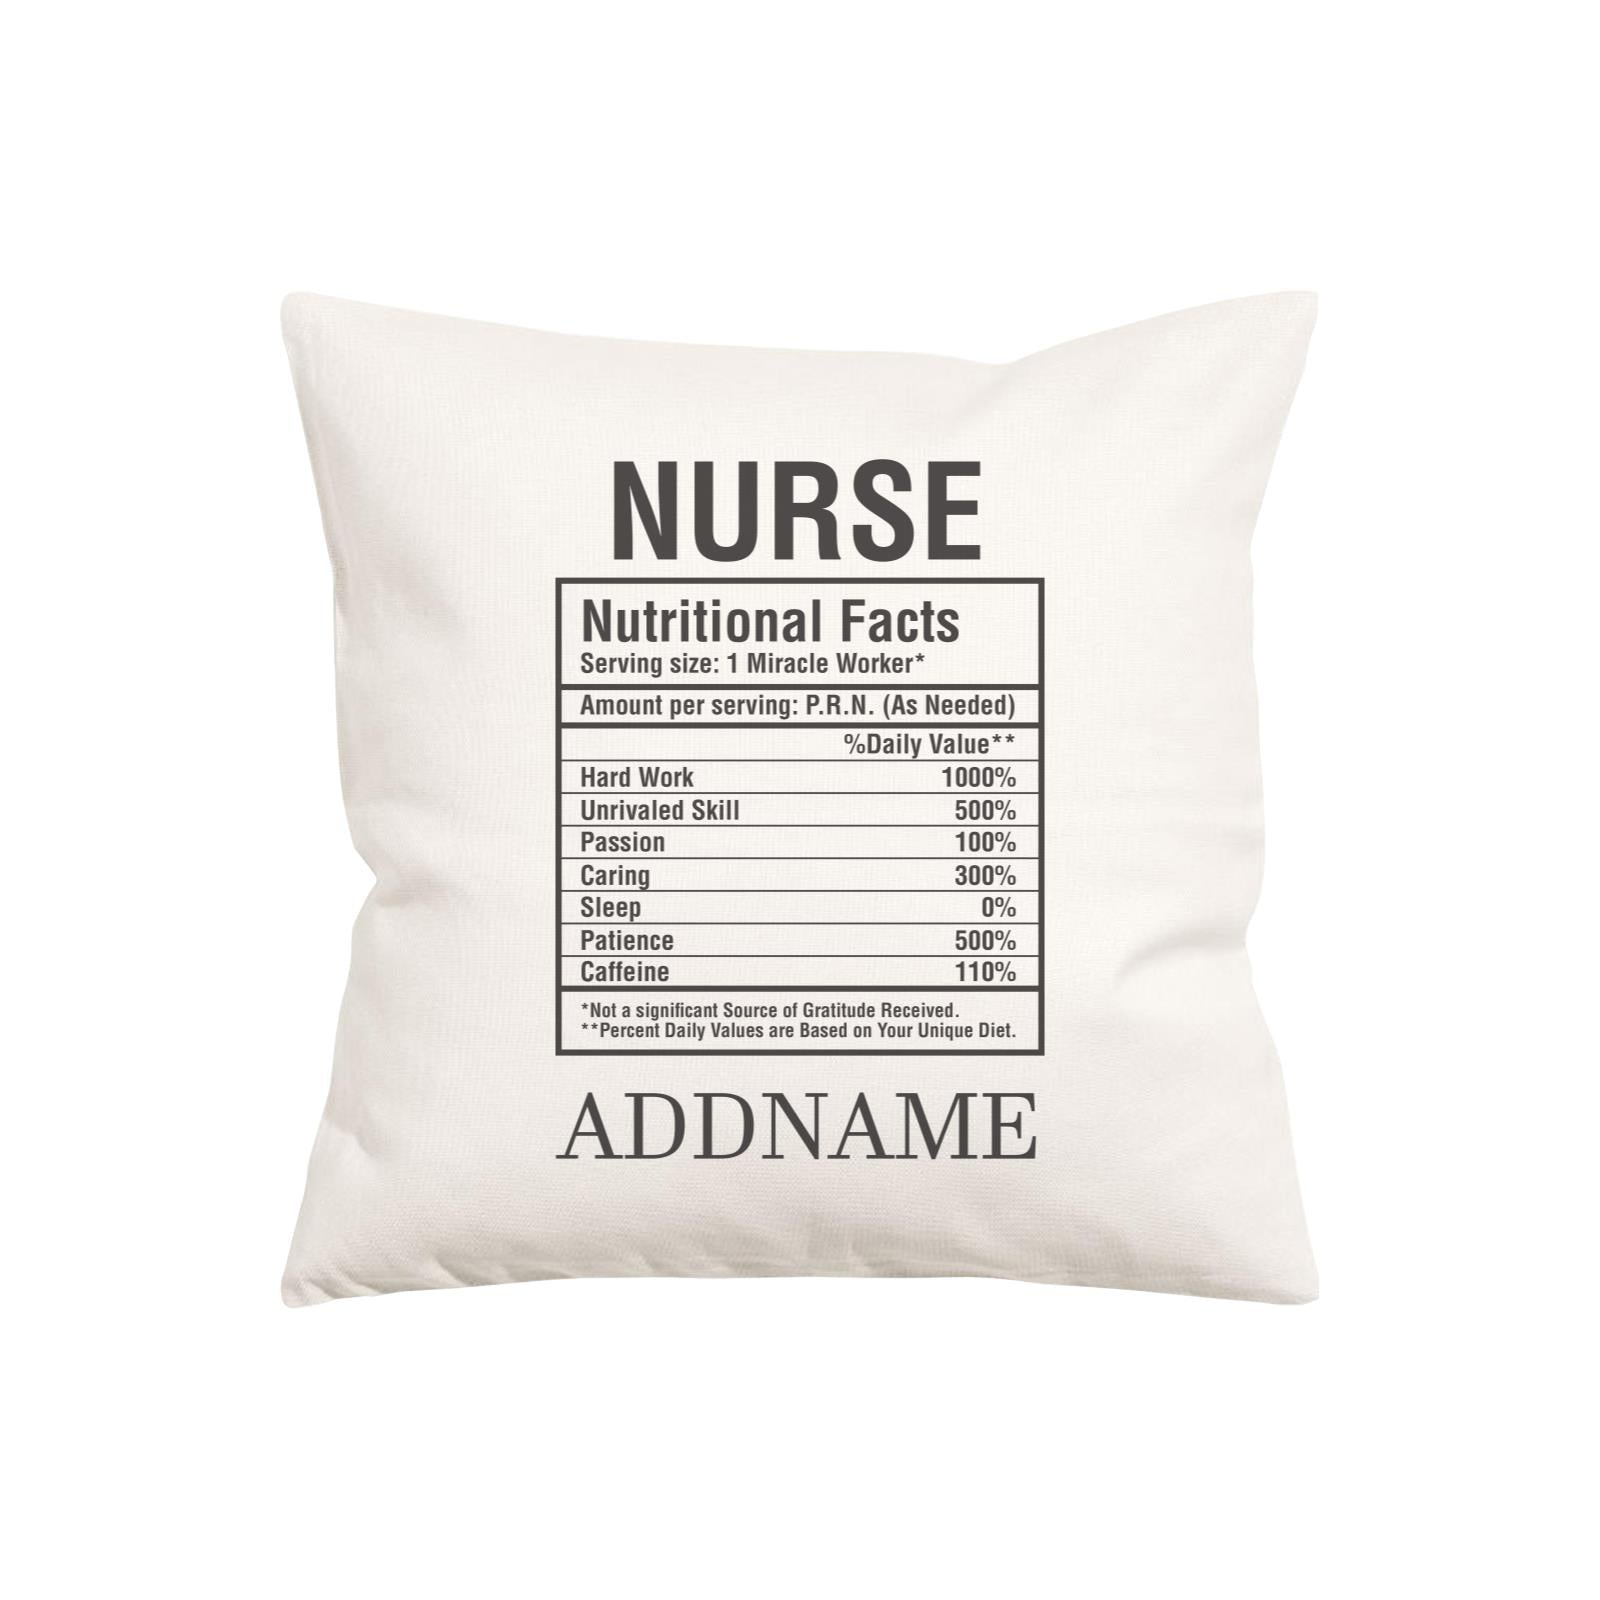 Nurse Nutritional Facts Pillow Cushion